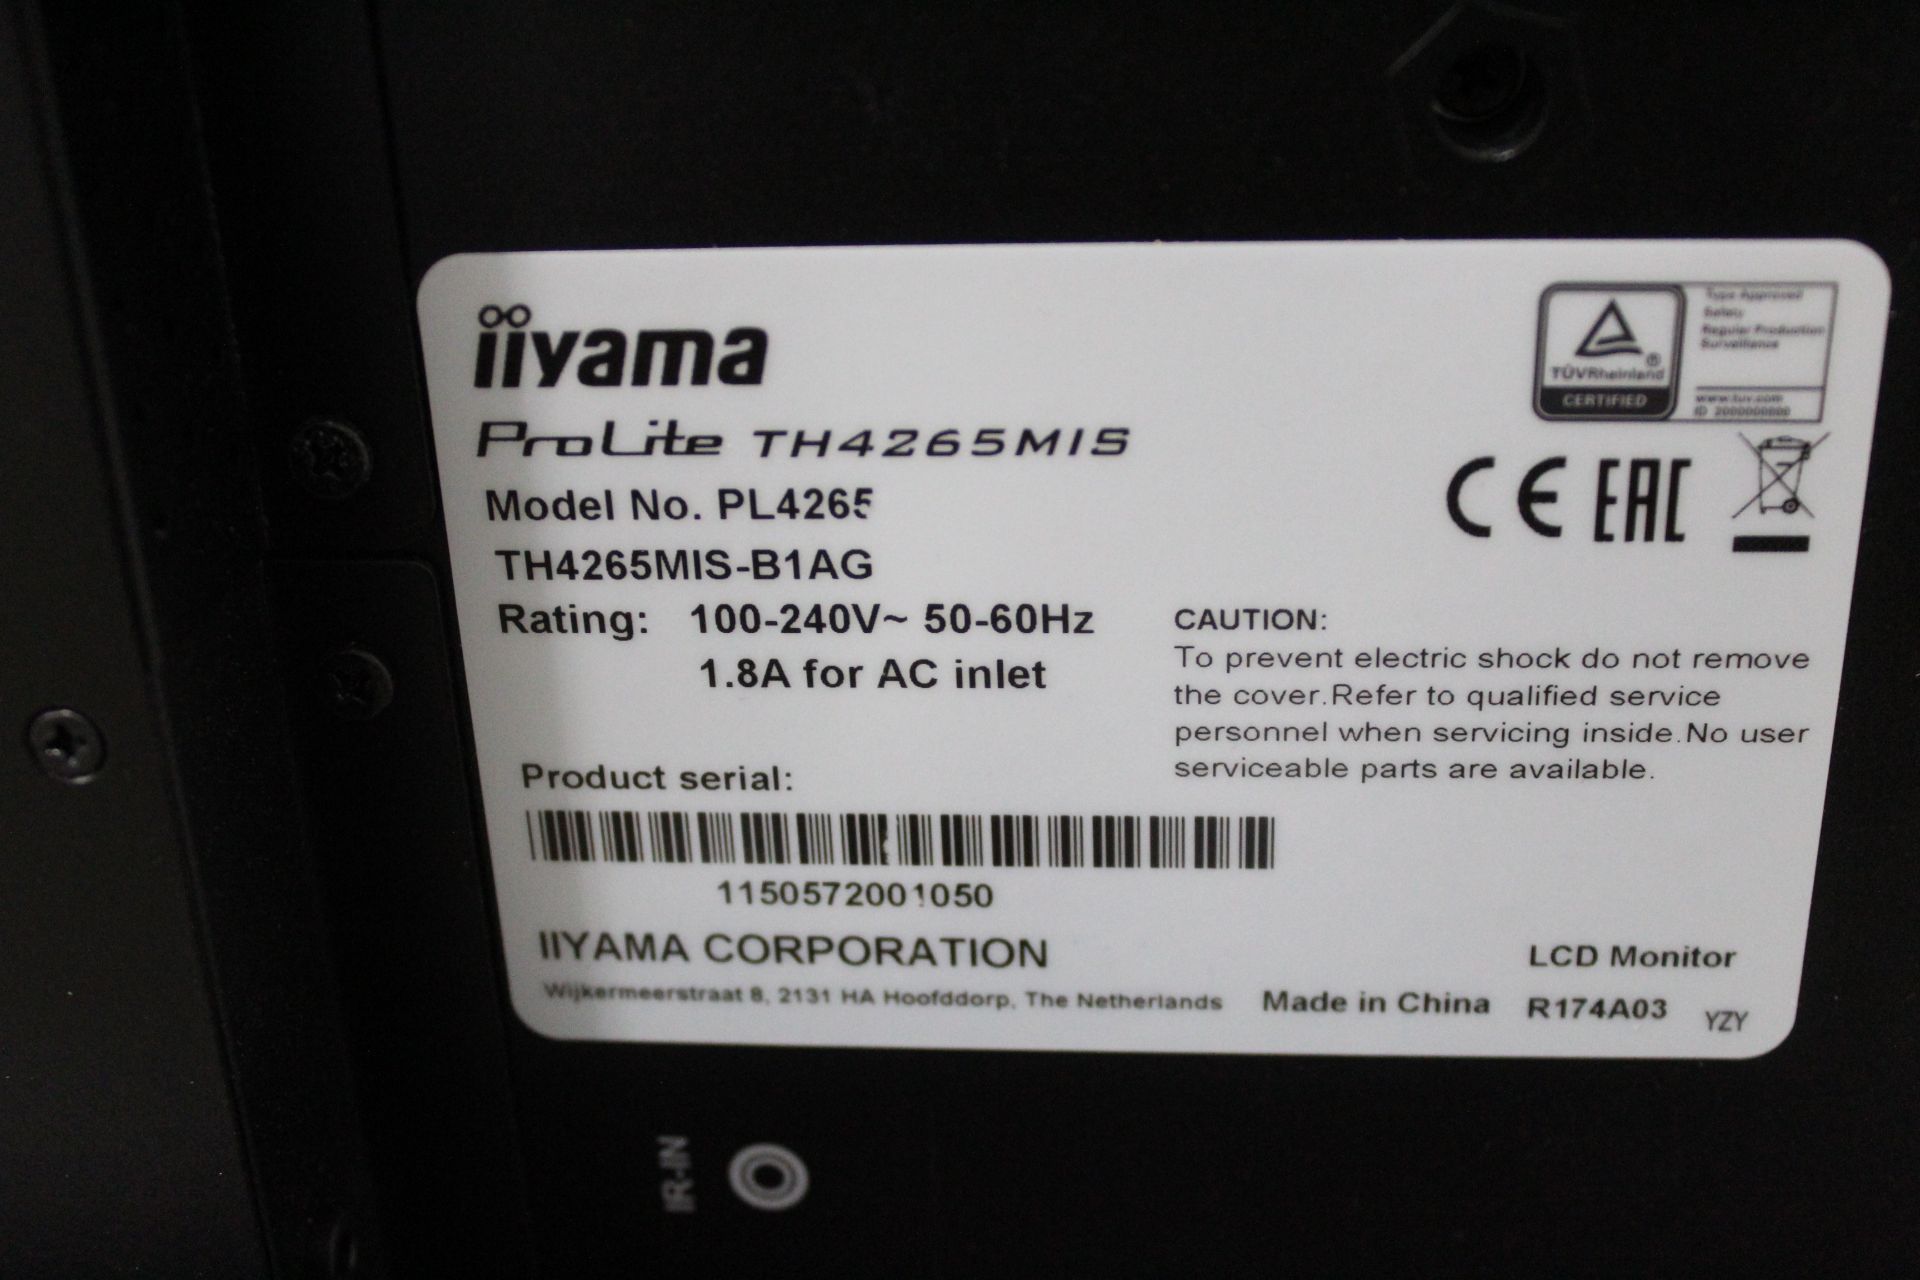 2x Iiyama ProLite TH4265MIS-B1AG 42" LCD touchscreens (20 Point) Serial No's. 1150564101099 & - Image 5 of 5